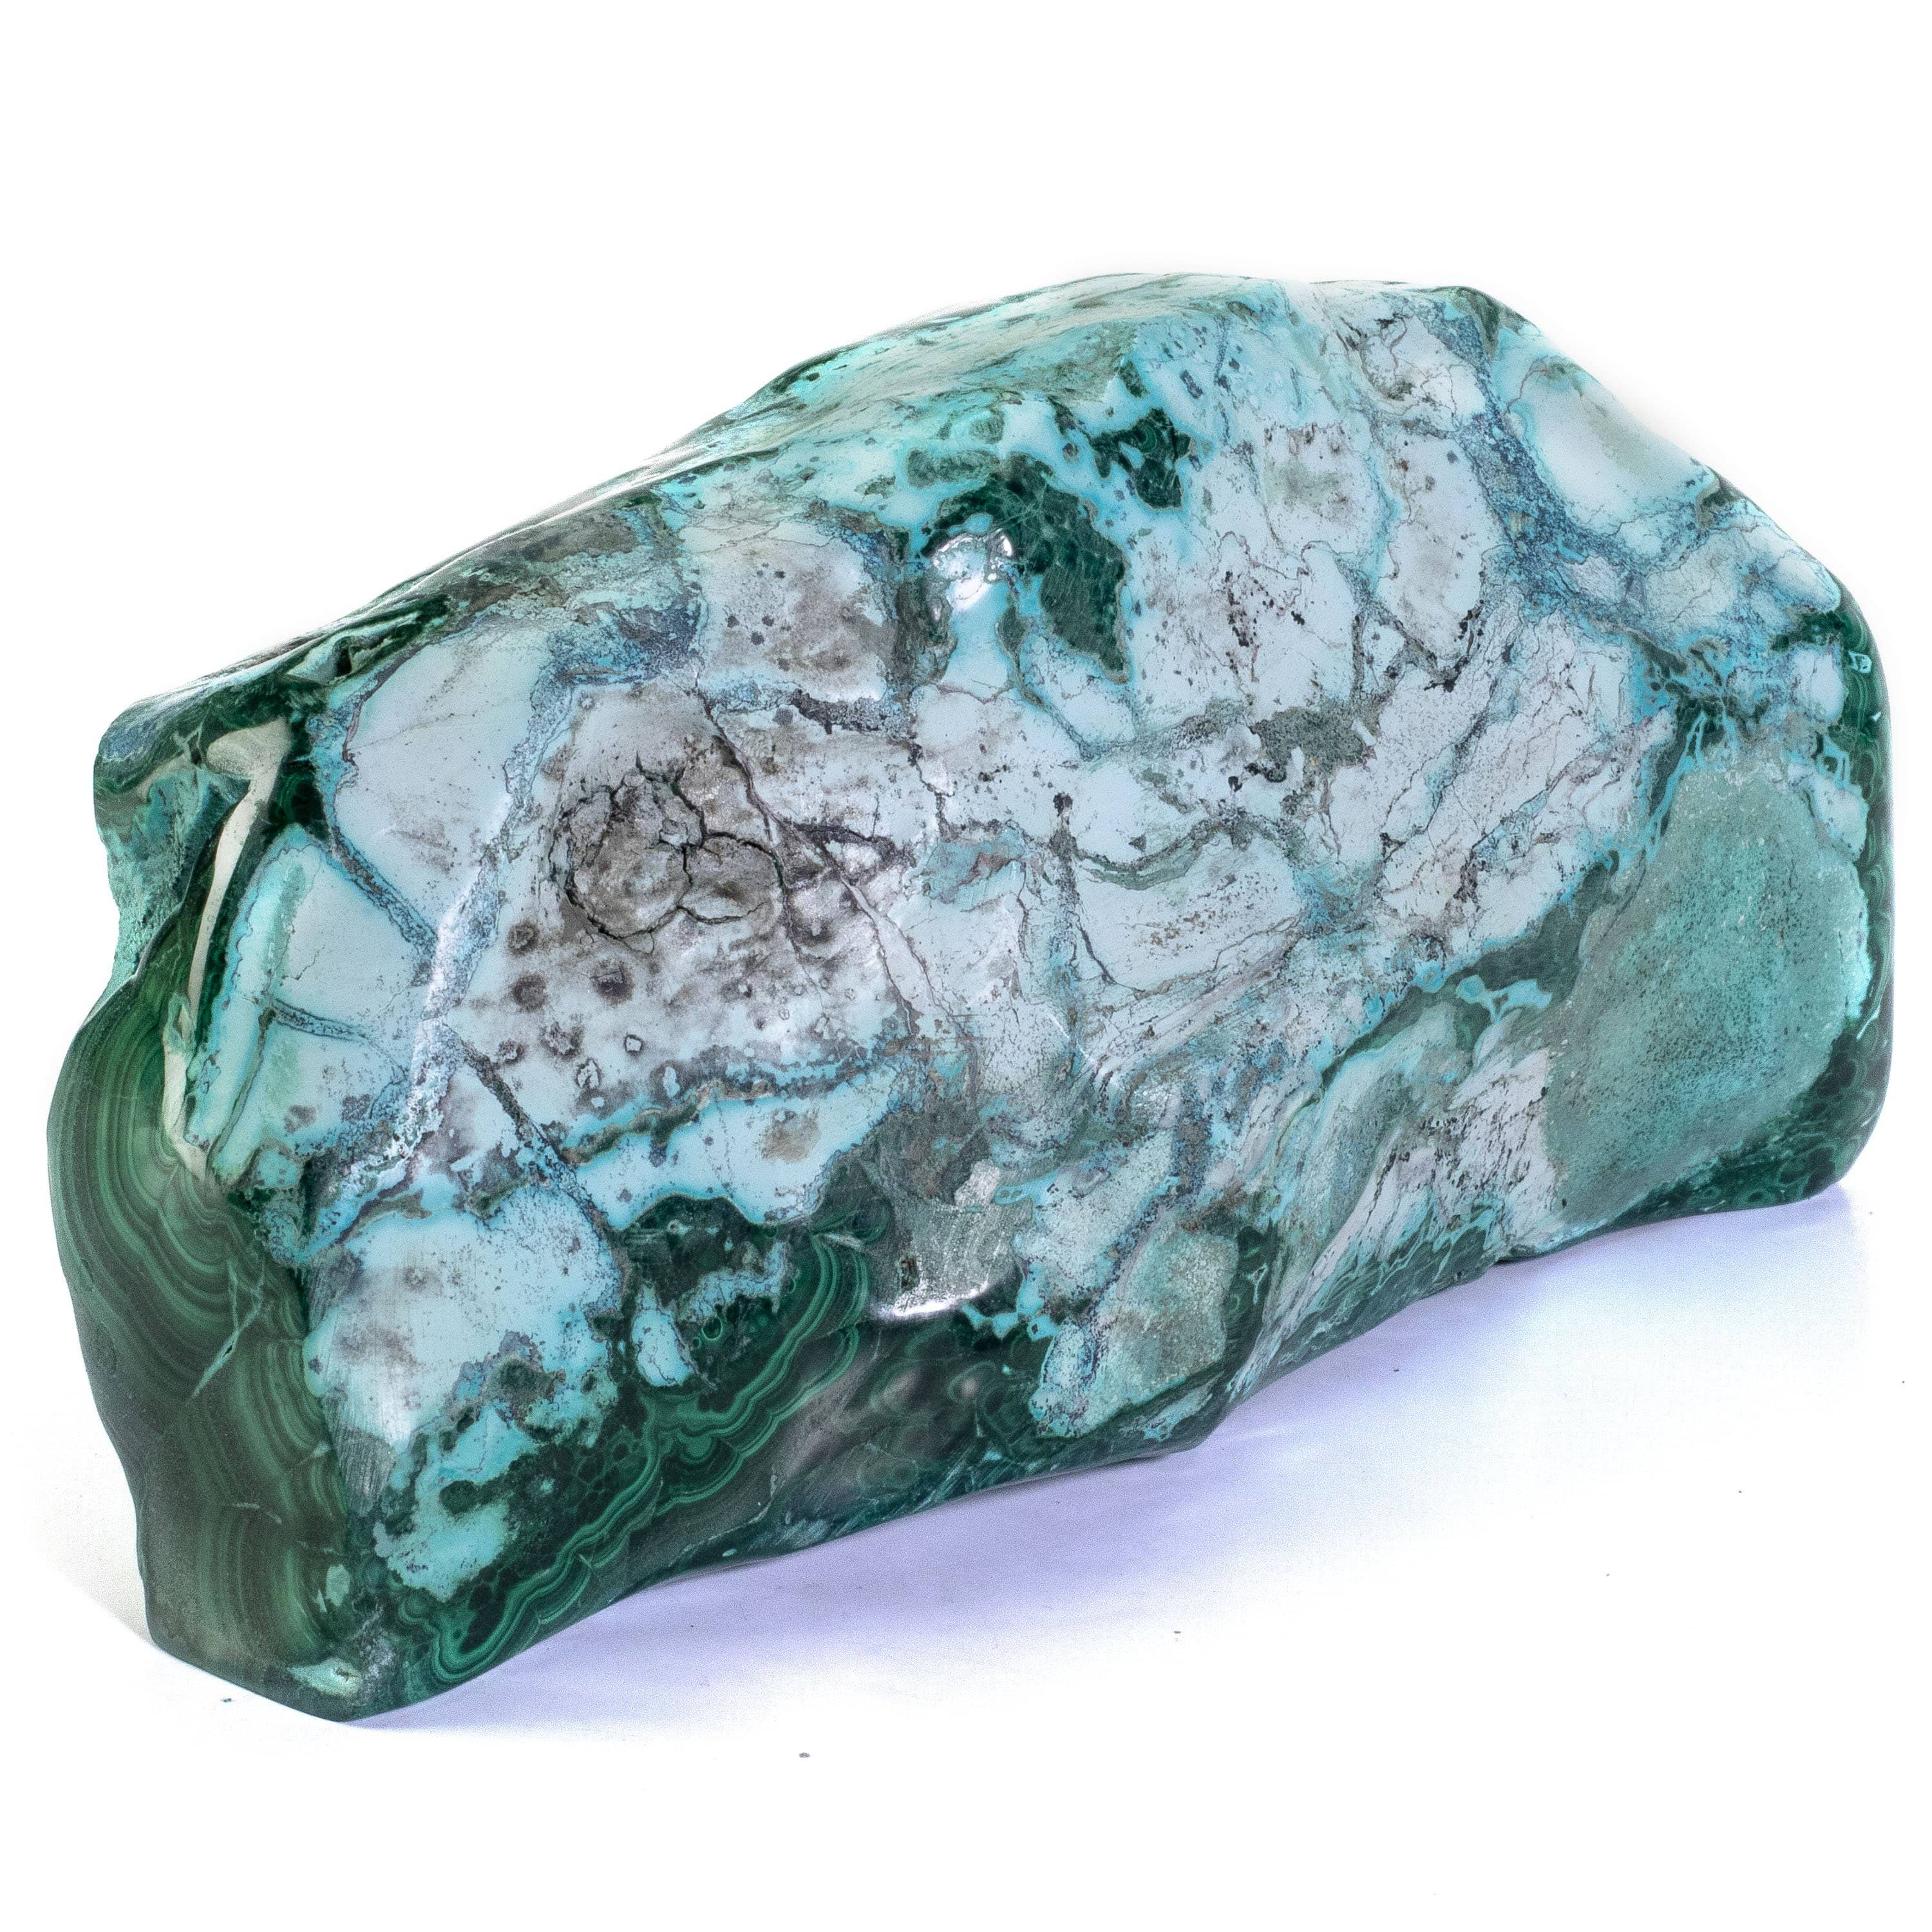 Kalifano Malachite Rare Natural Green Malachite with Blue Chrysocolla Freeform Specimen from Congo - 1.7 kg / 3.7 lbs MAC1450.002